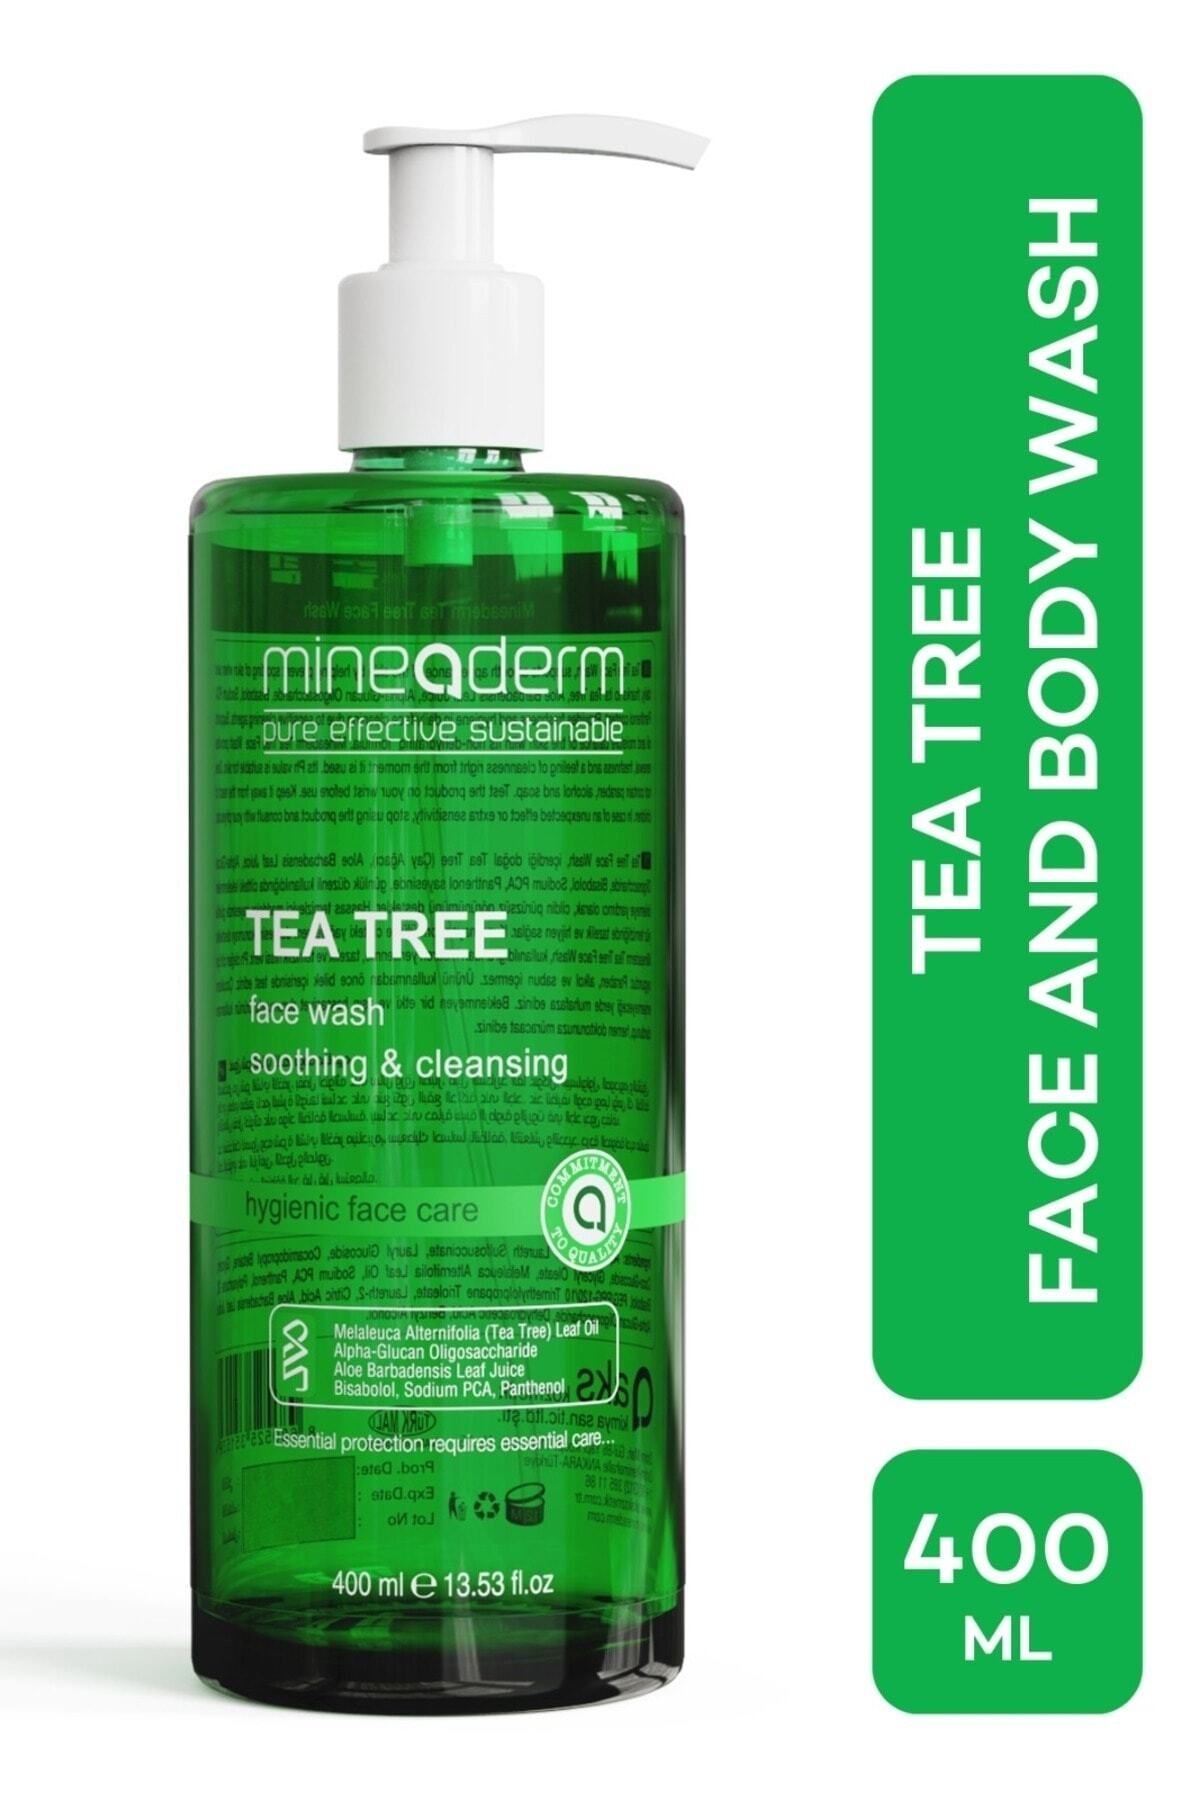 mineaderm Tea Tree Face and Body Wash